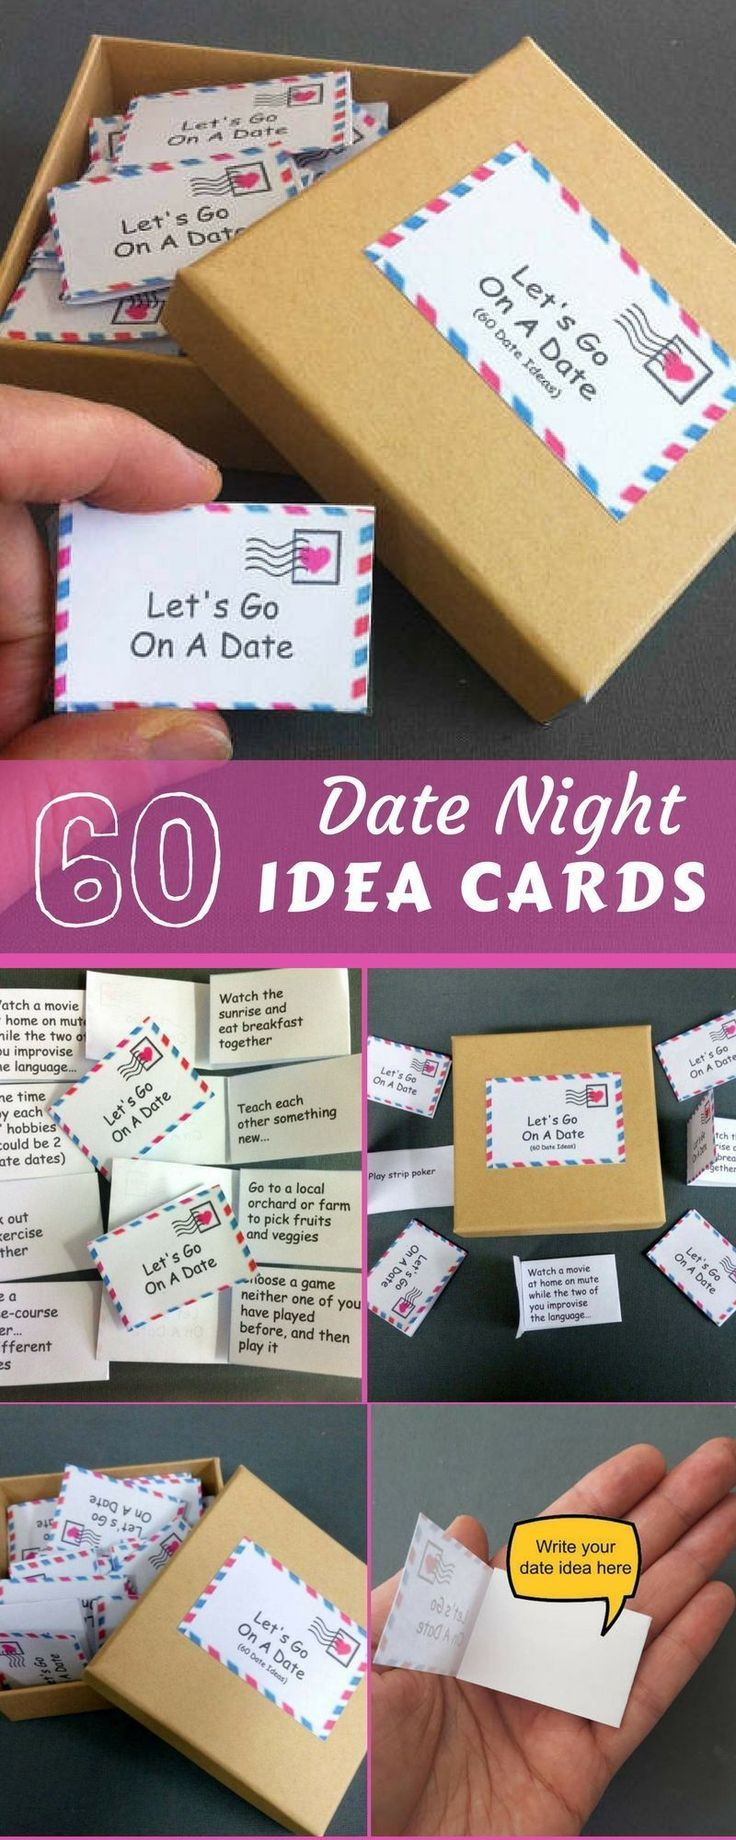 Gift Ideas For Your Boyfriend
 Date Night Box 60 Date Night Ideas Romantic Gift For